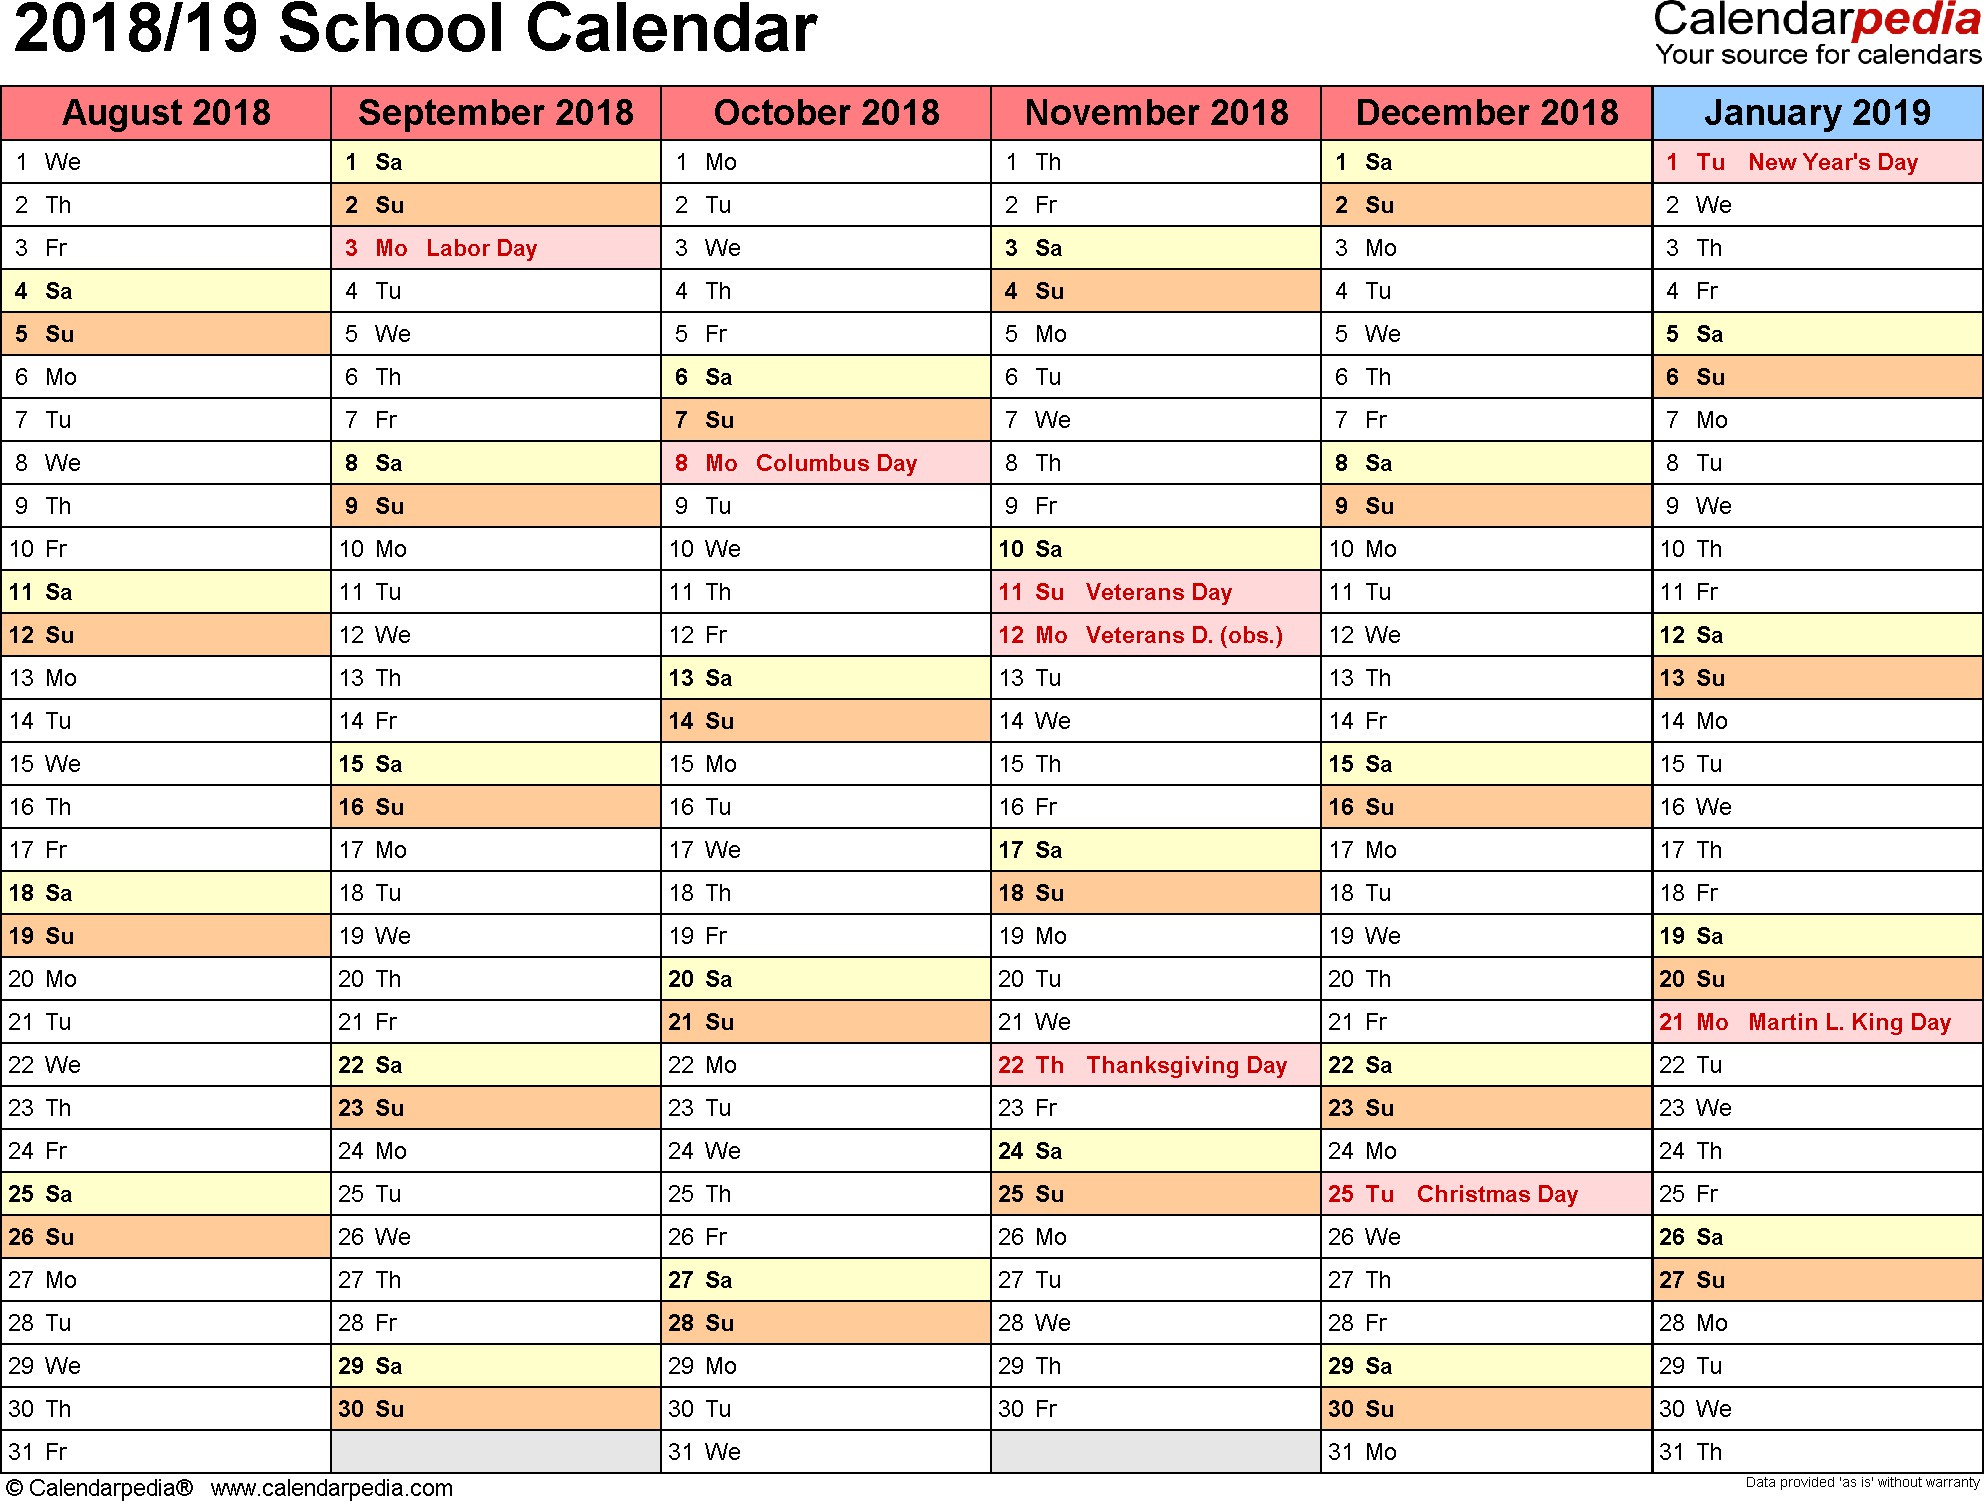 school calendars 2018 2019 as free printable word templates